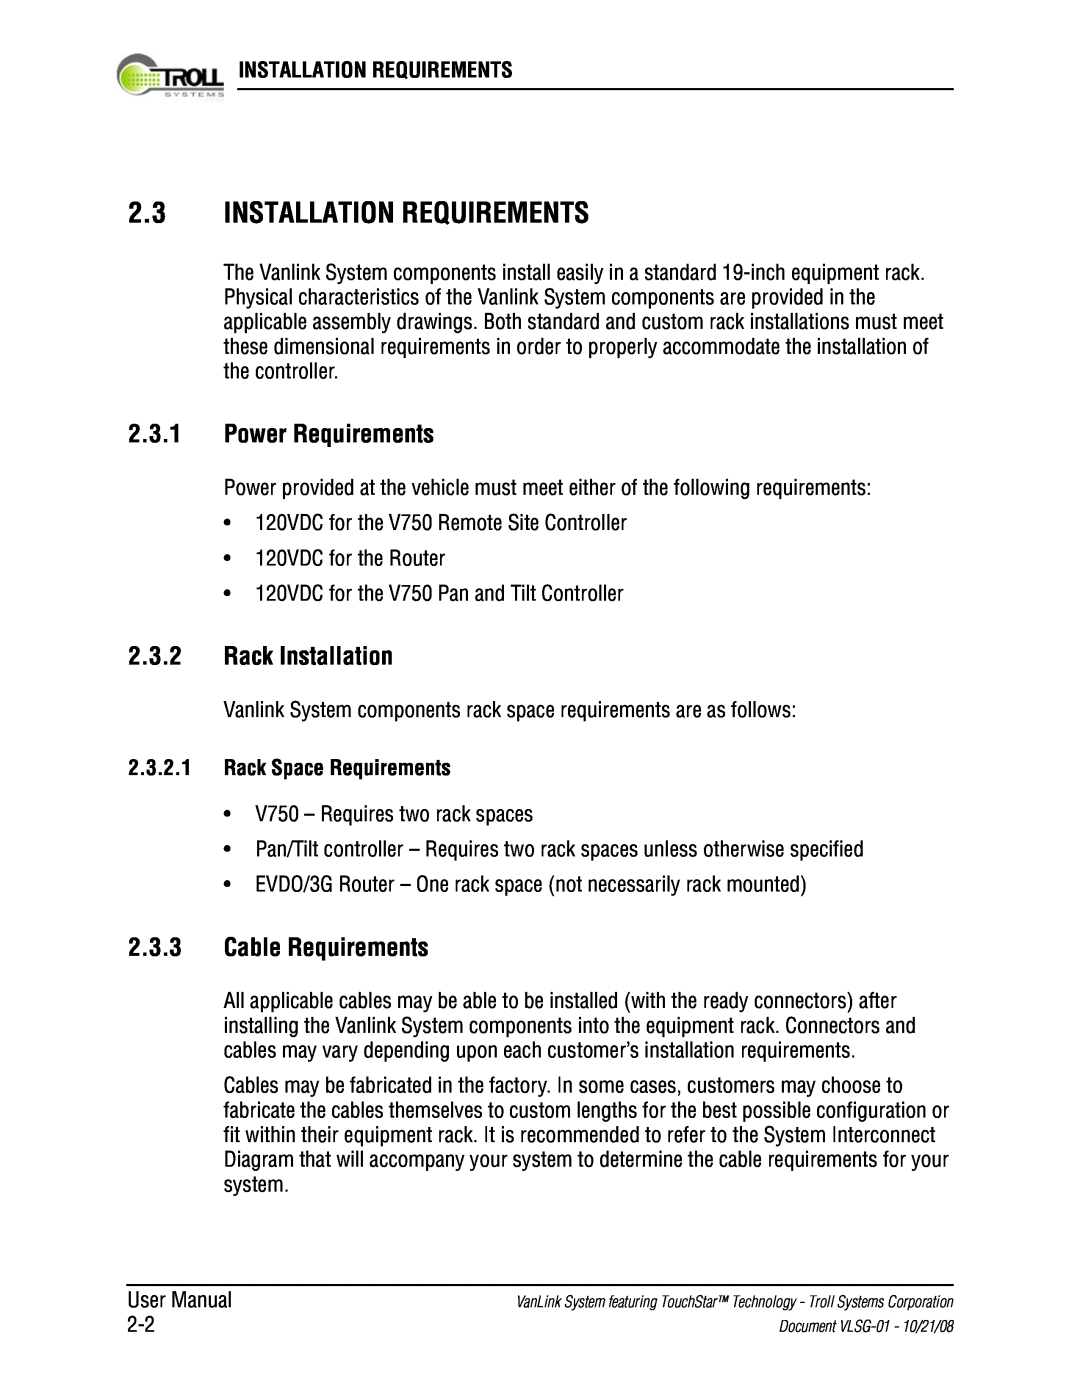 Kyocera VLSG-01 2.3INSTALLATION REQUIREMENTS, 2.3.1Power Requirements, 2.3.2Rack Installation, 2.3.3Cable Requirements 